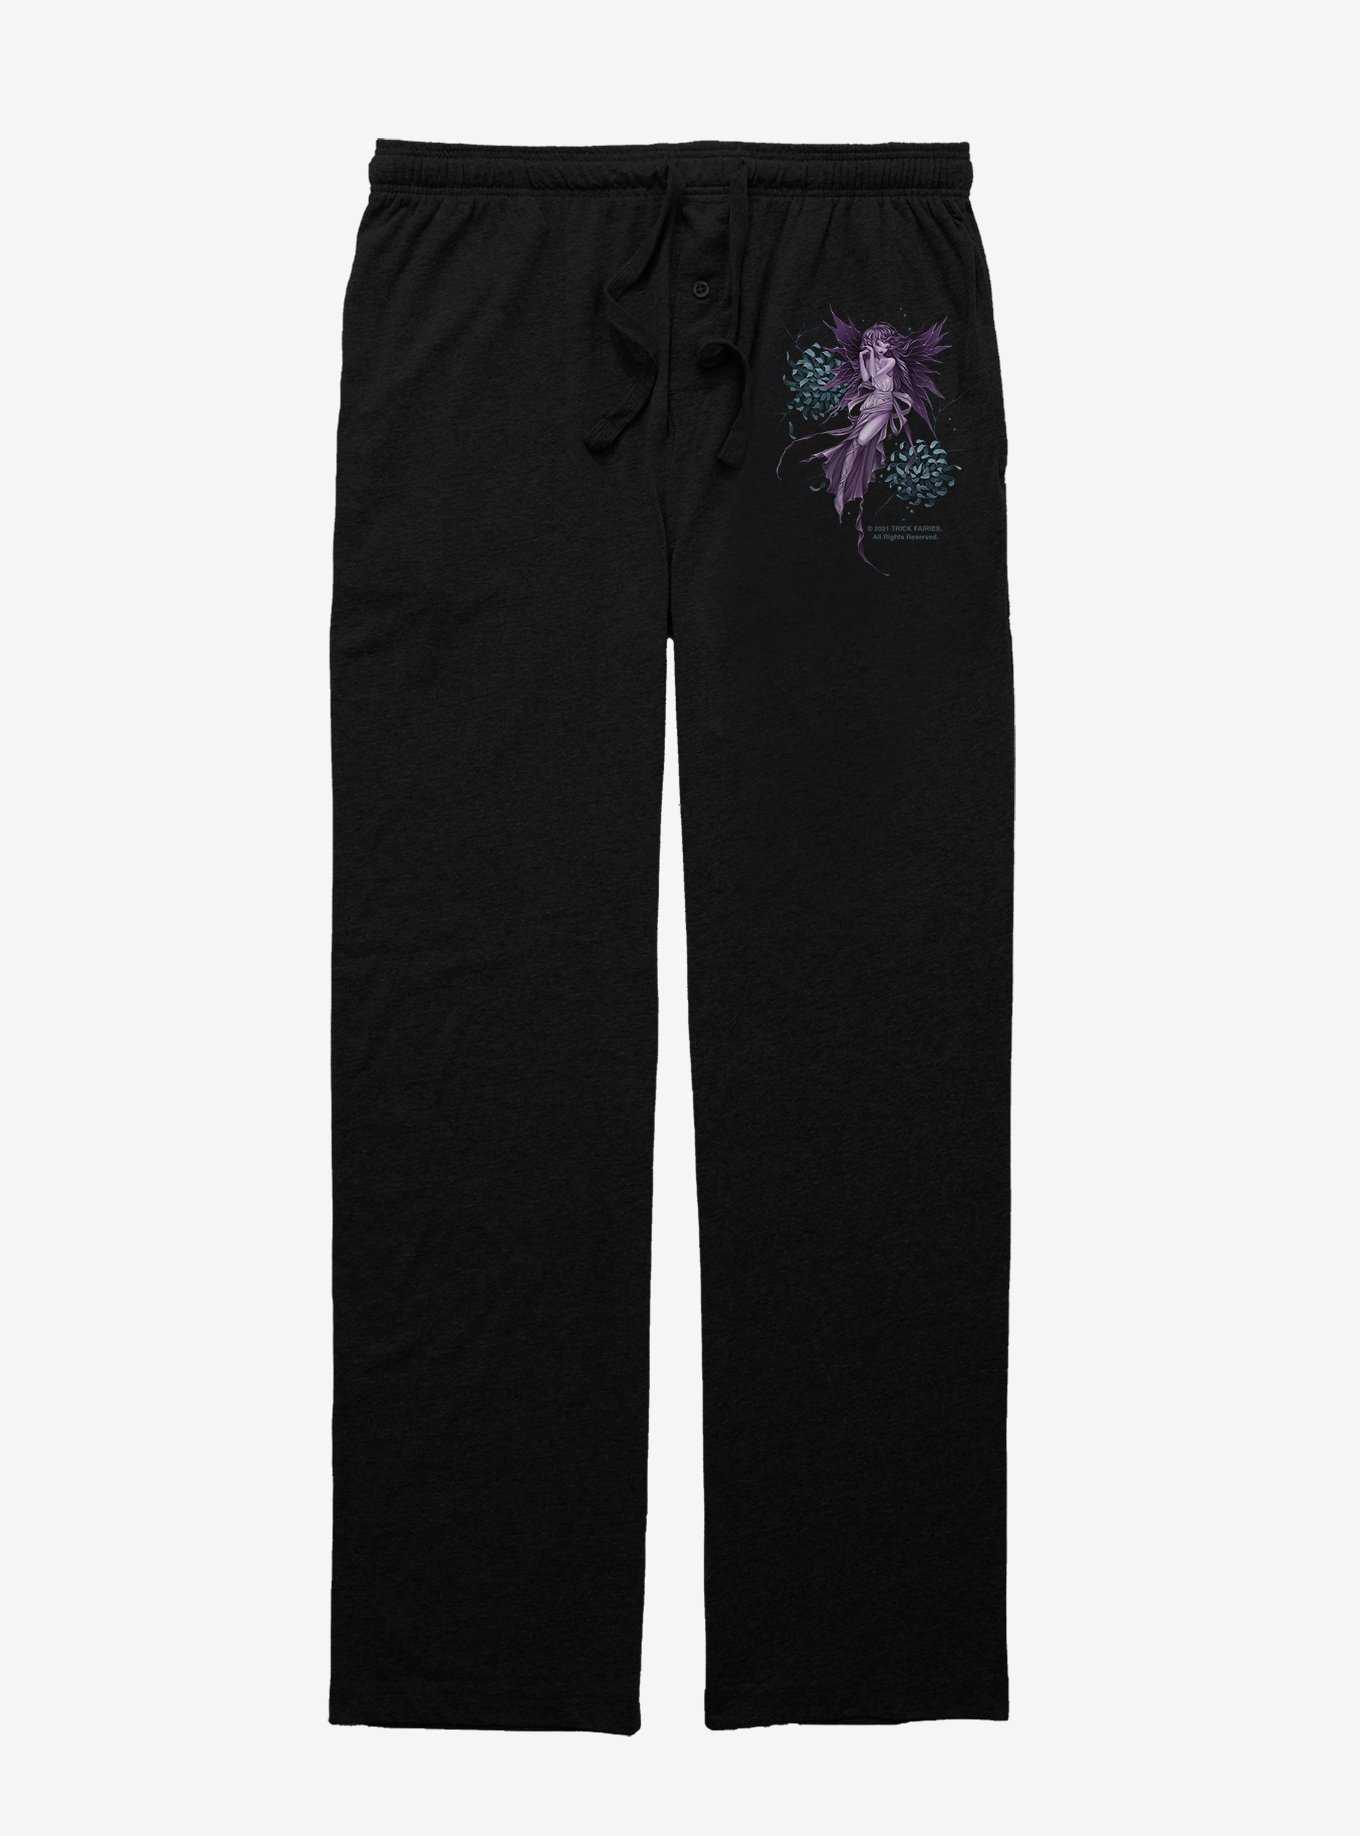 Black & Purple Plaid Split Super Skinny Jeans